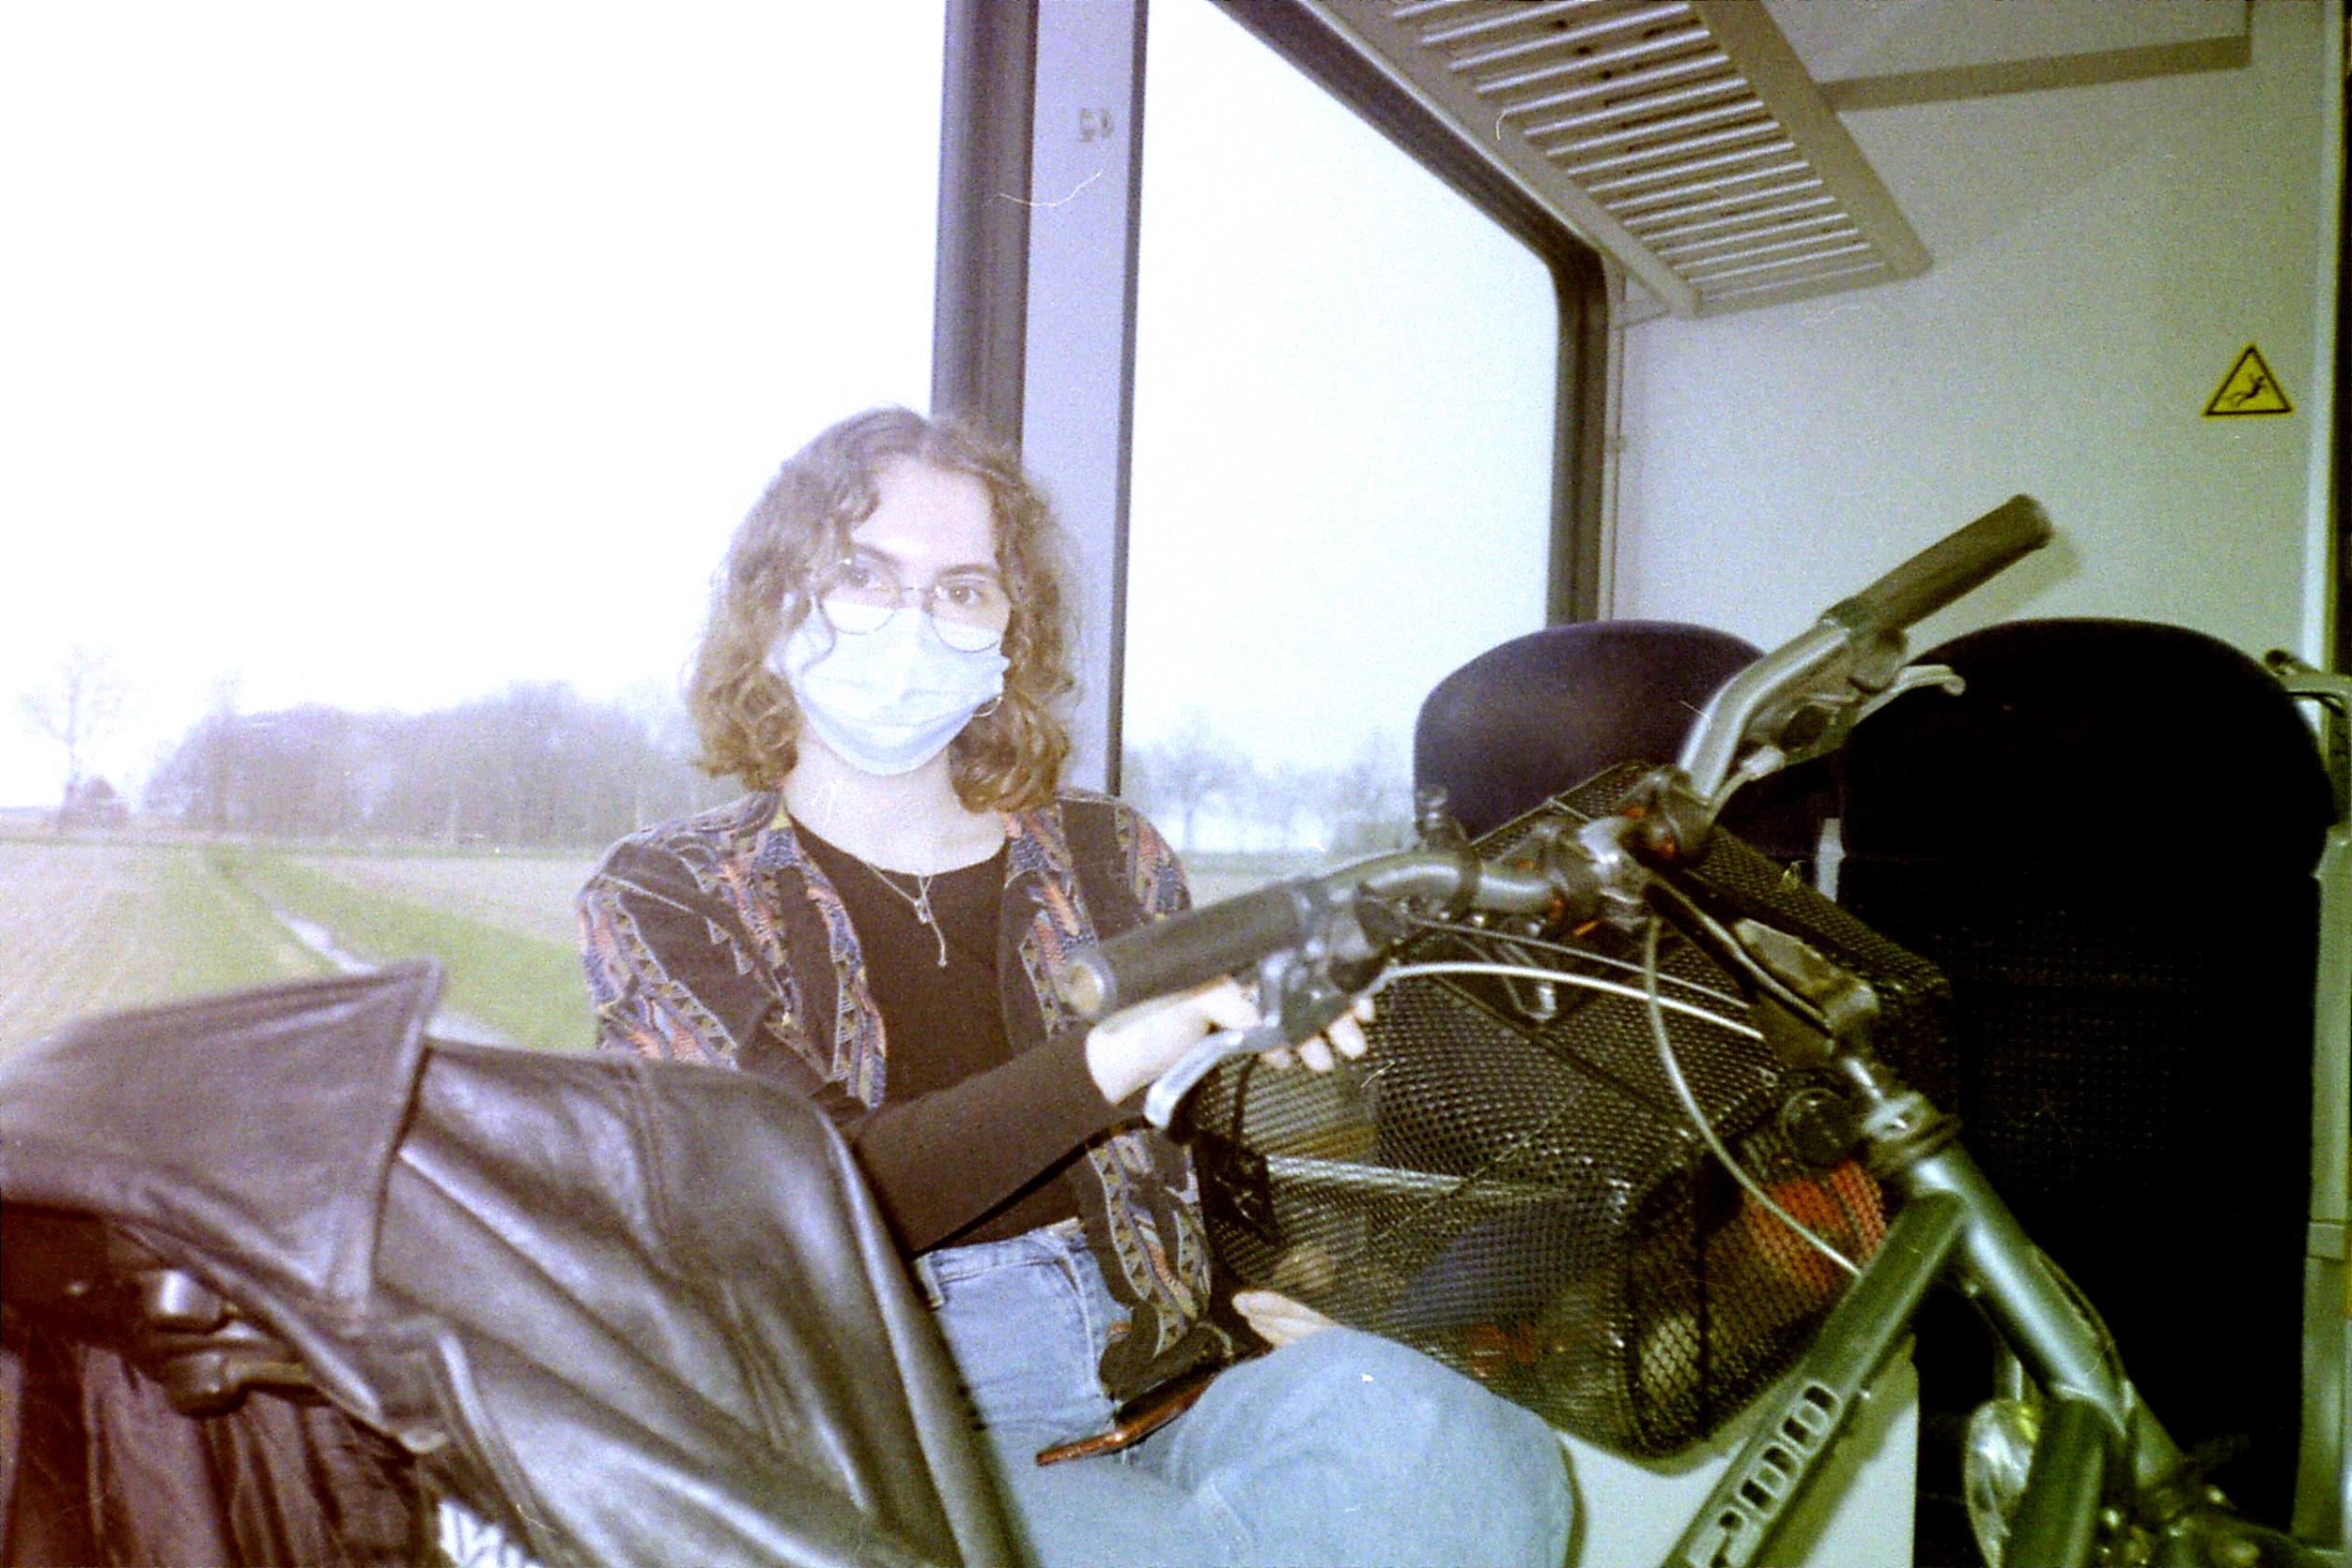 dani on a train with a mask on and a bike